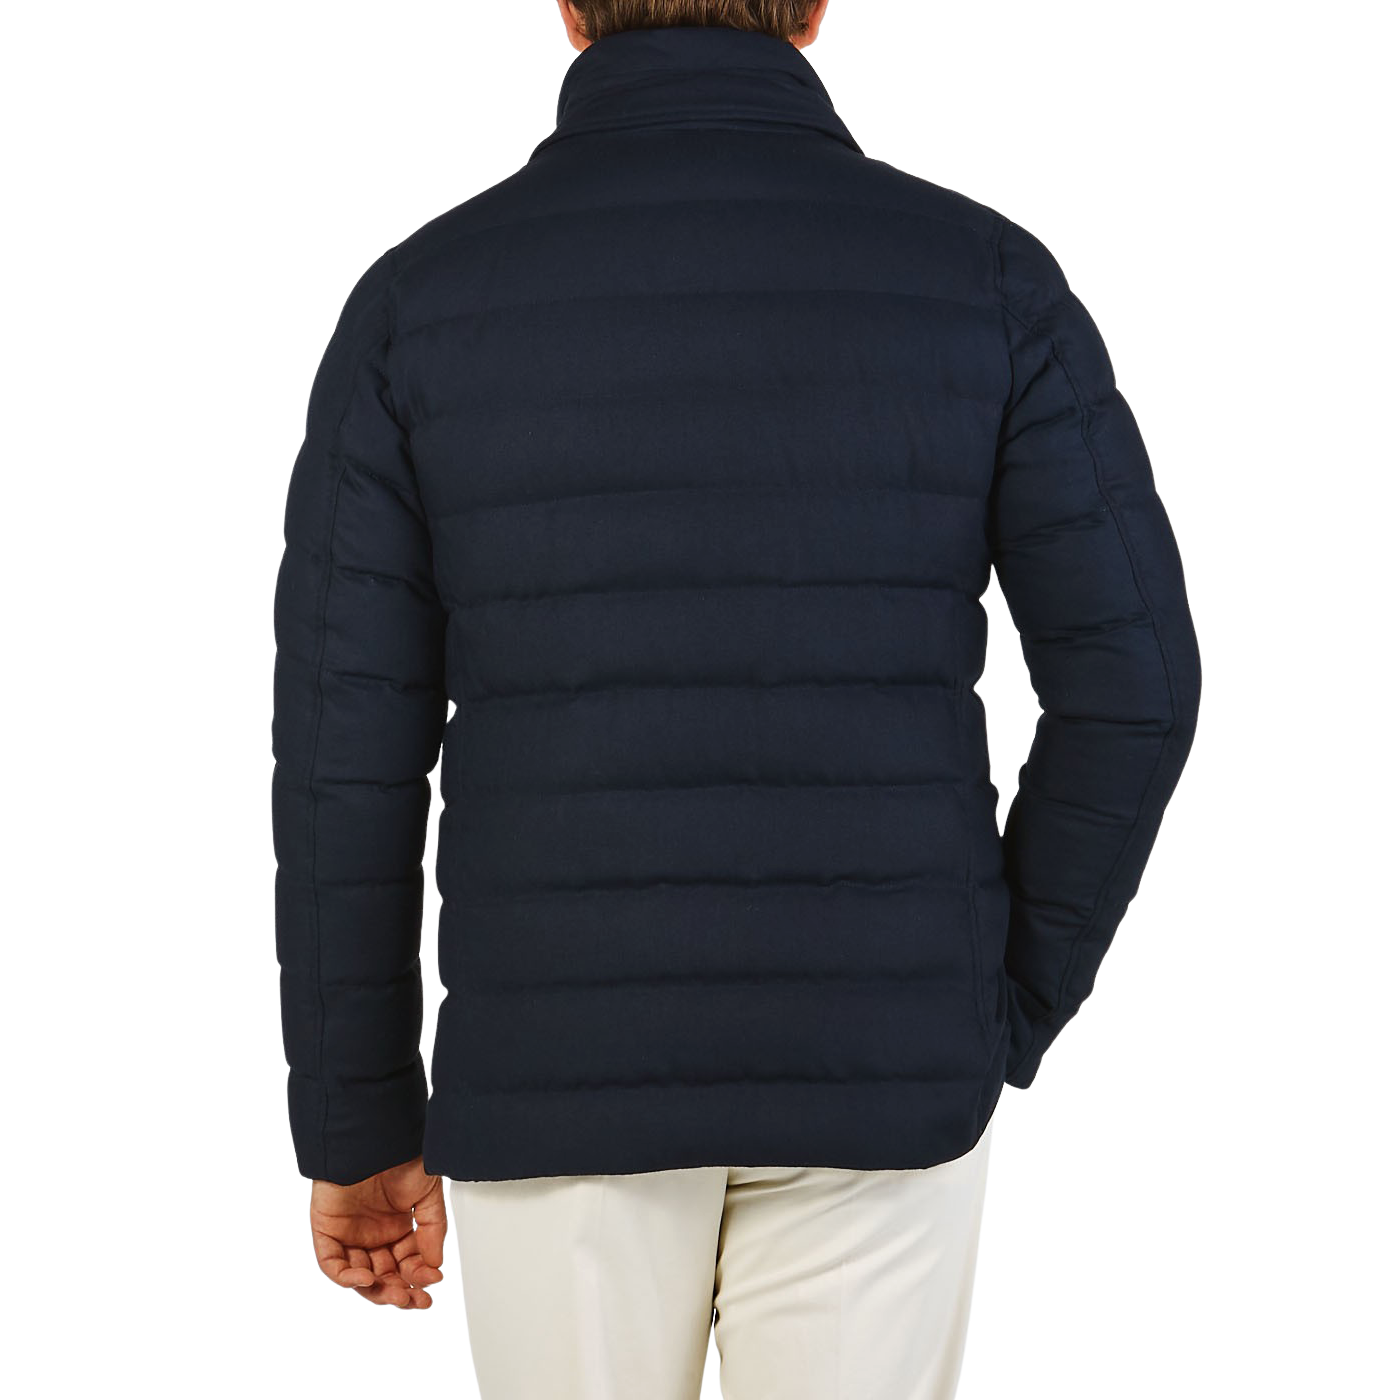 Norfolk tailored down jacket